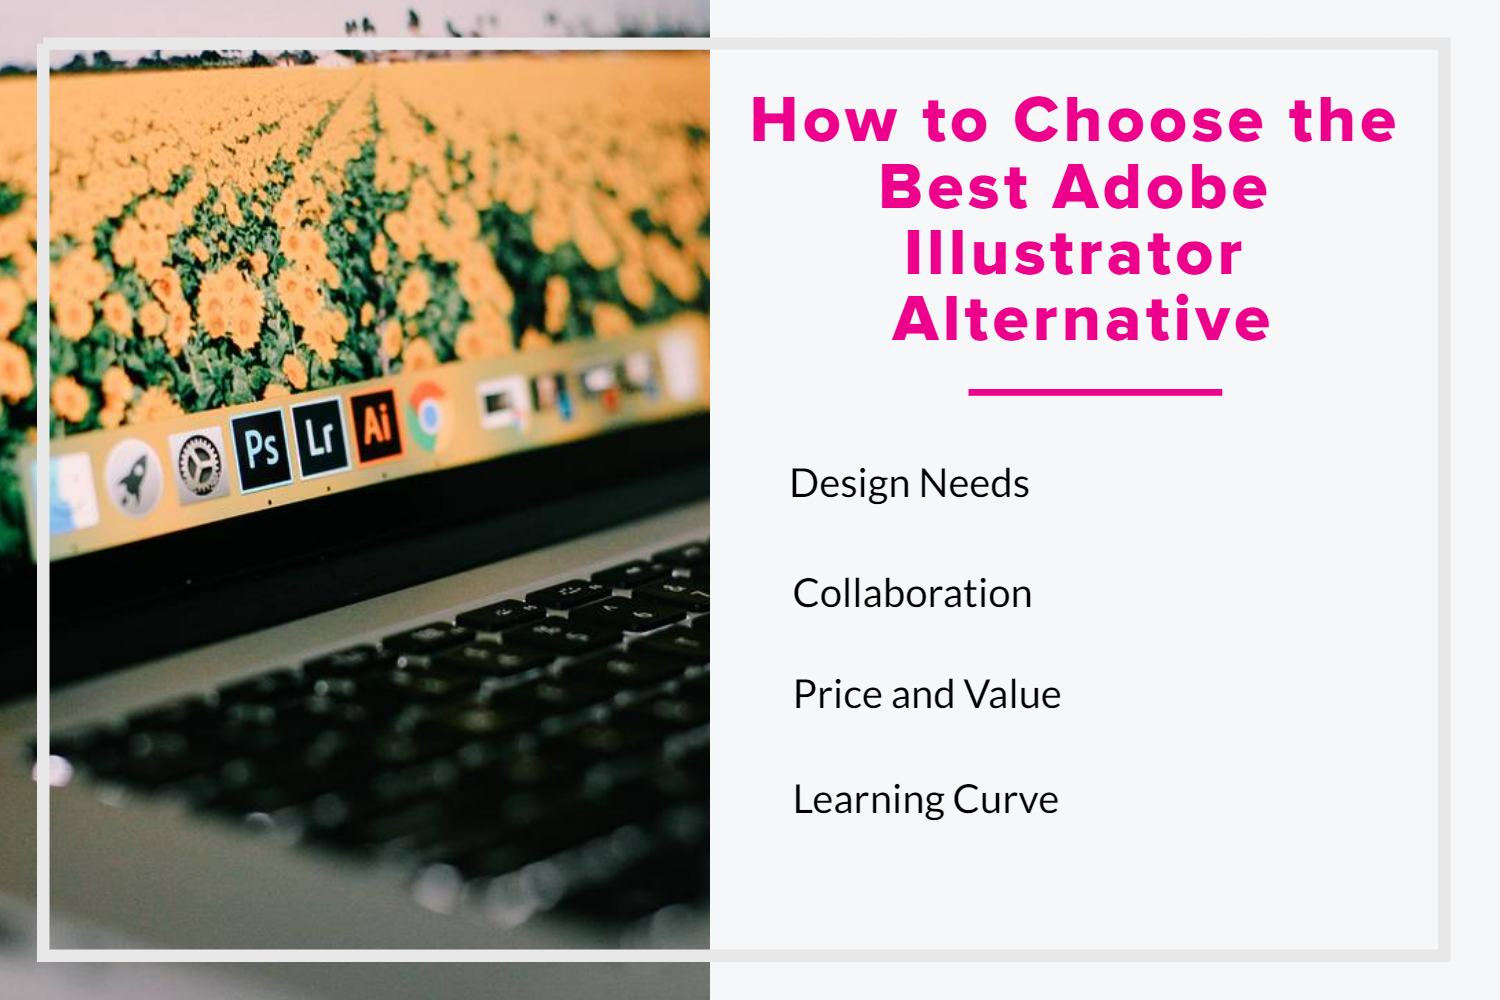 How to Choose the Best Adobe Illustrator Alternative